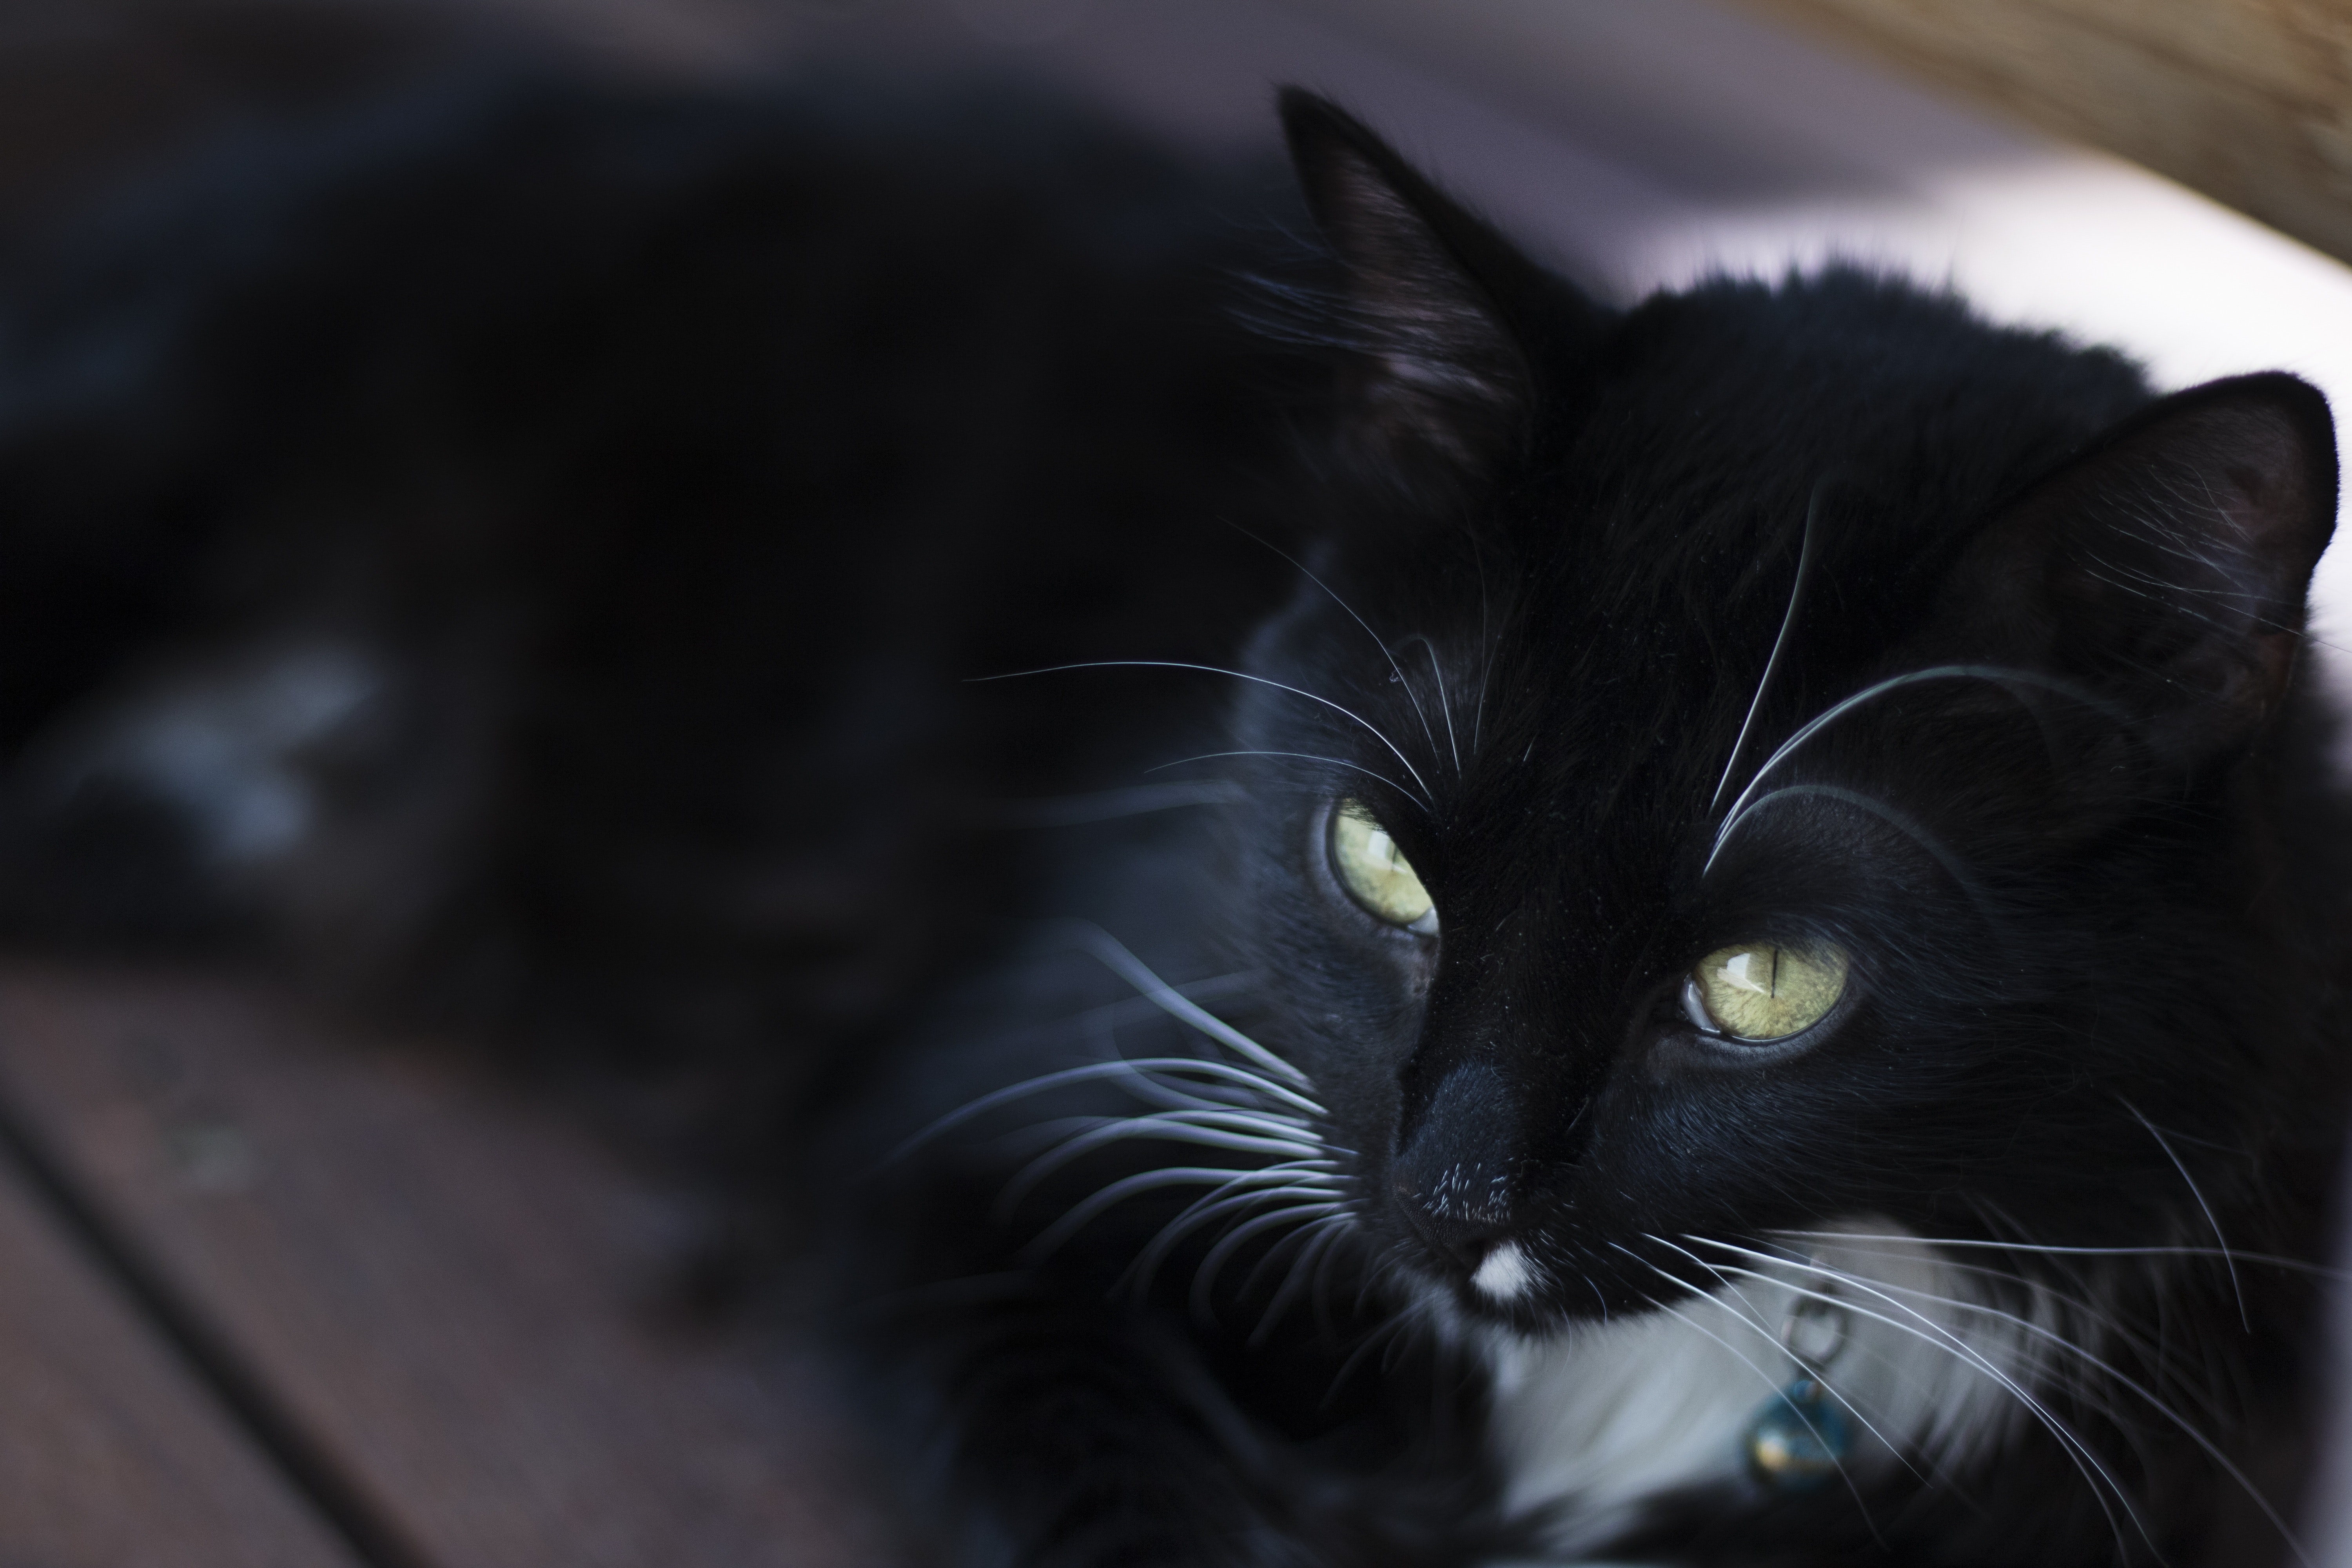 Black Cat Images · Pexels · Free Stock Photos